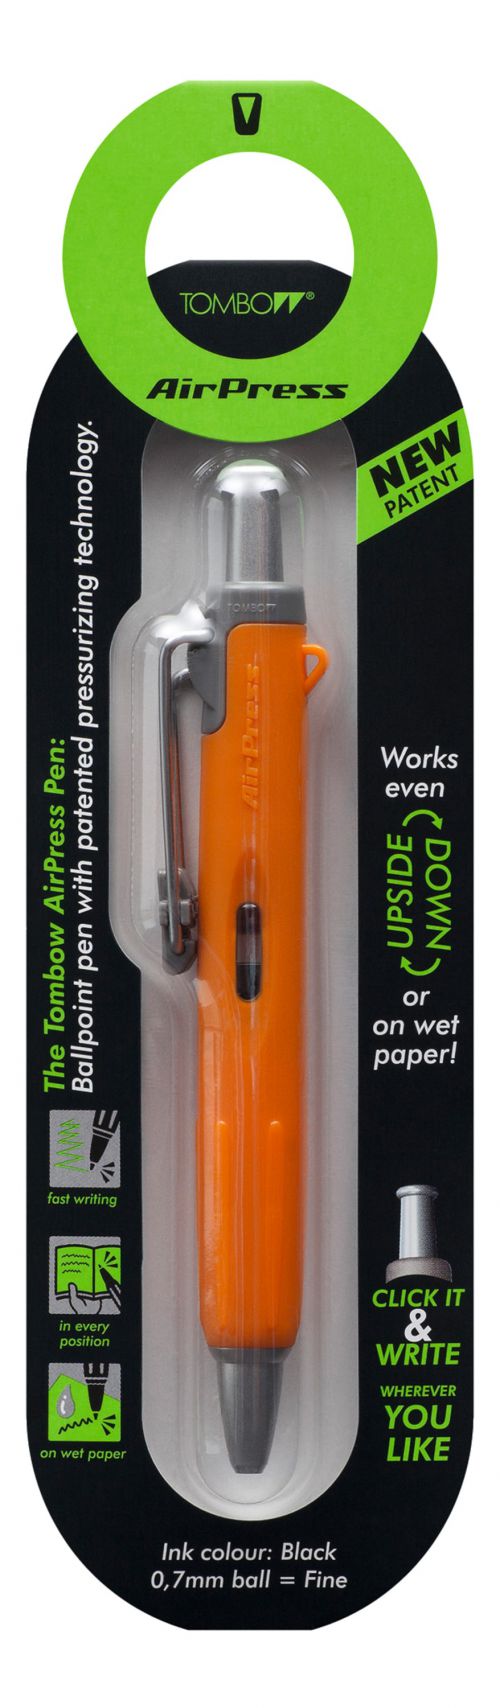 Ballpoint Tombow AirPress Retractable Ballpoint Pen 0.7mm Tip Orange Barrel Black Ink